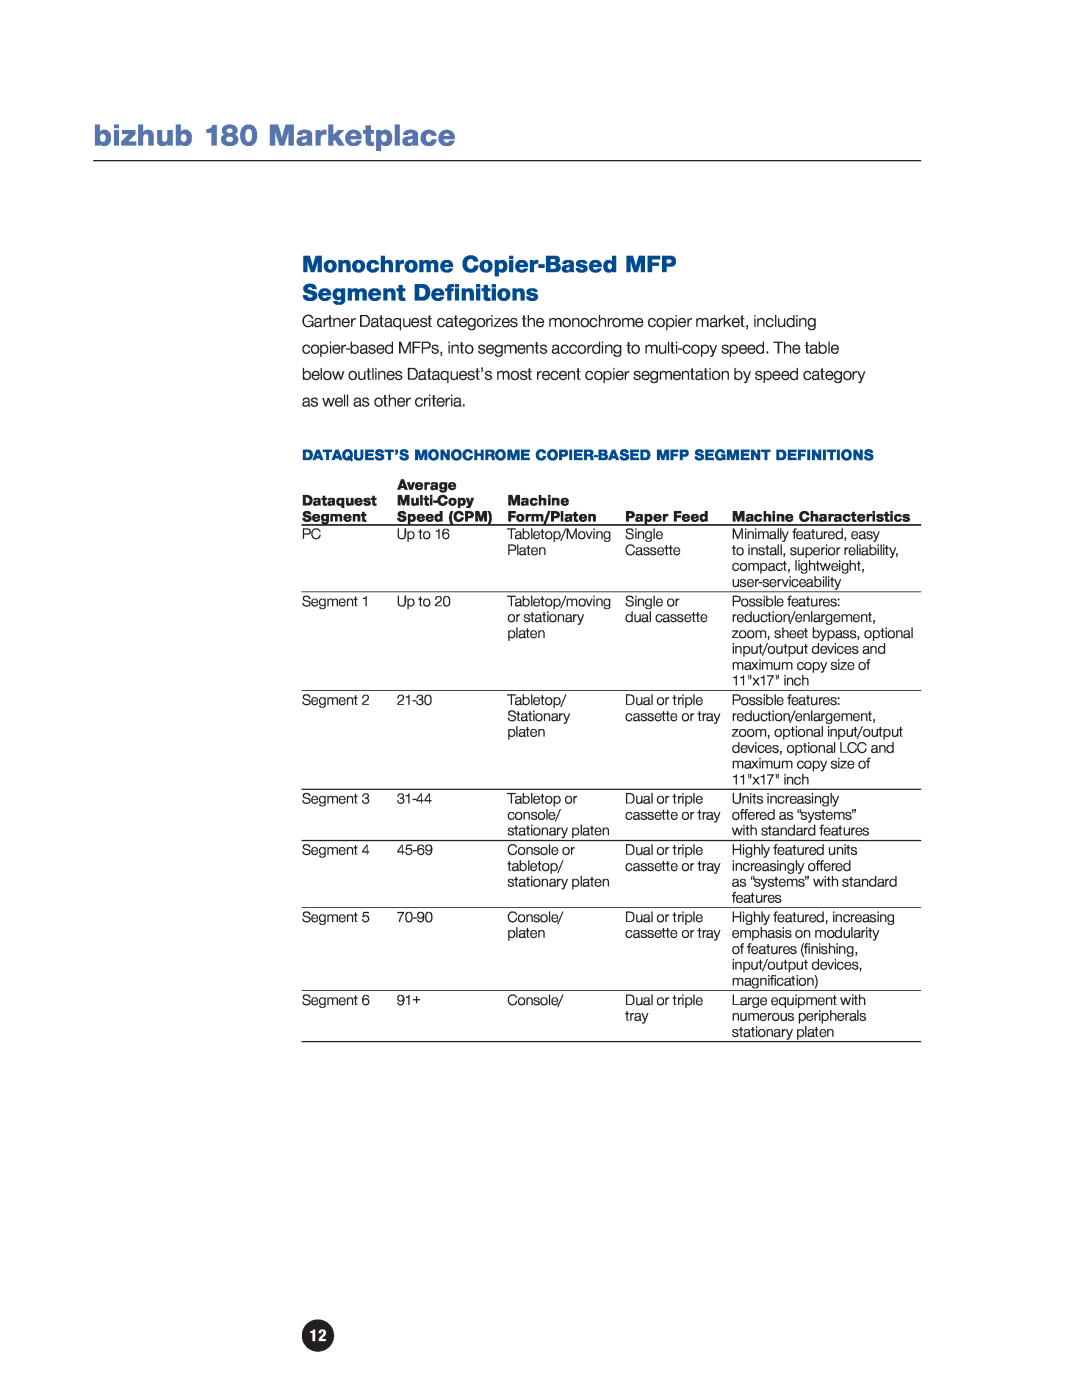 Konica Minolta manual Monochrome Copier-Based MFP Segment Definitions, bizhub 180 Marketplace 